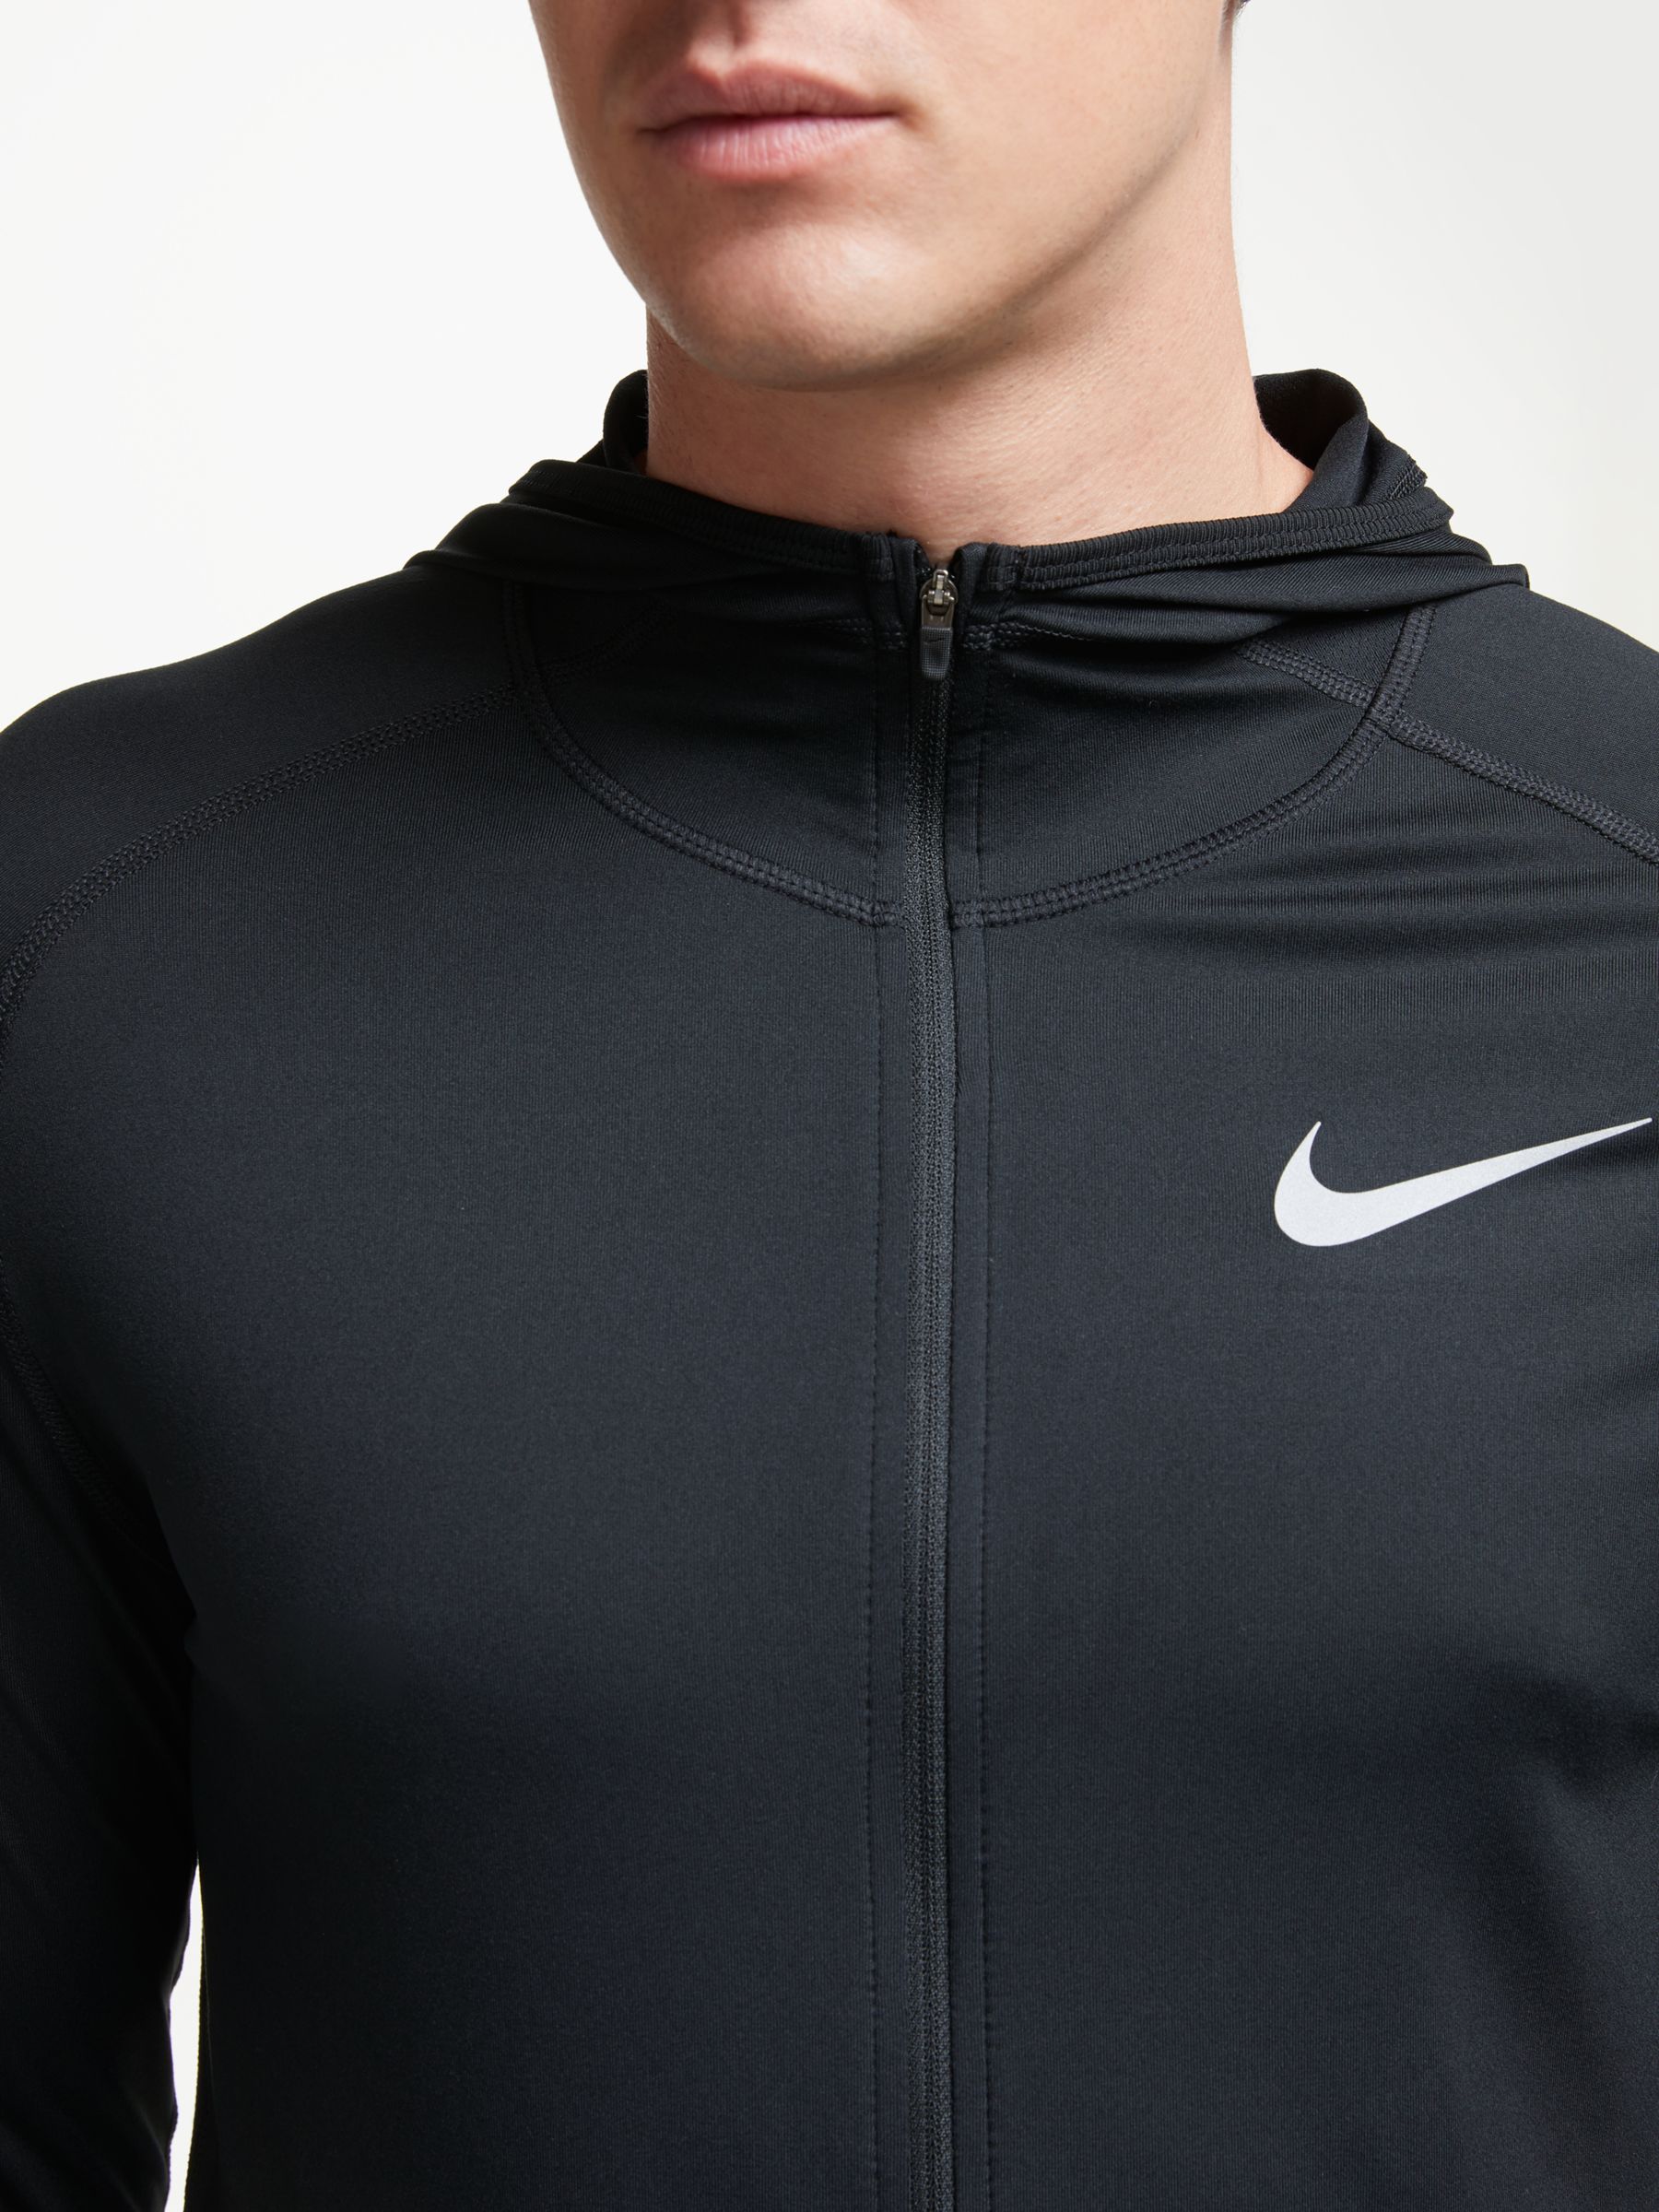 Nike Dry Element Long Sleeve Full Zip 